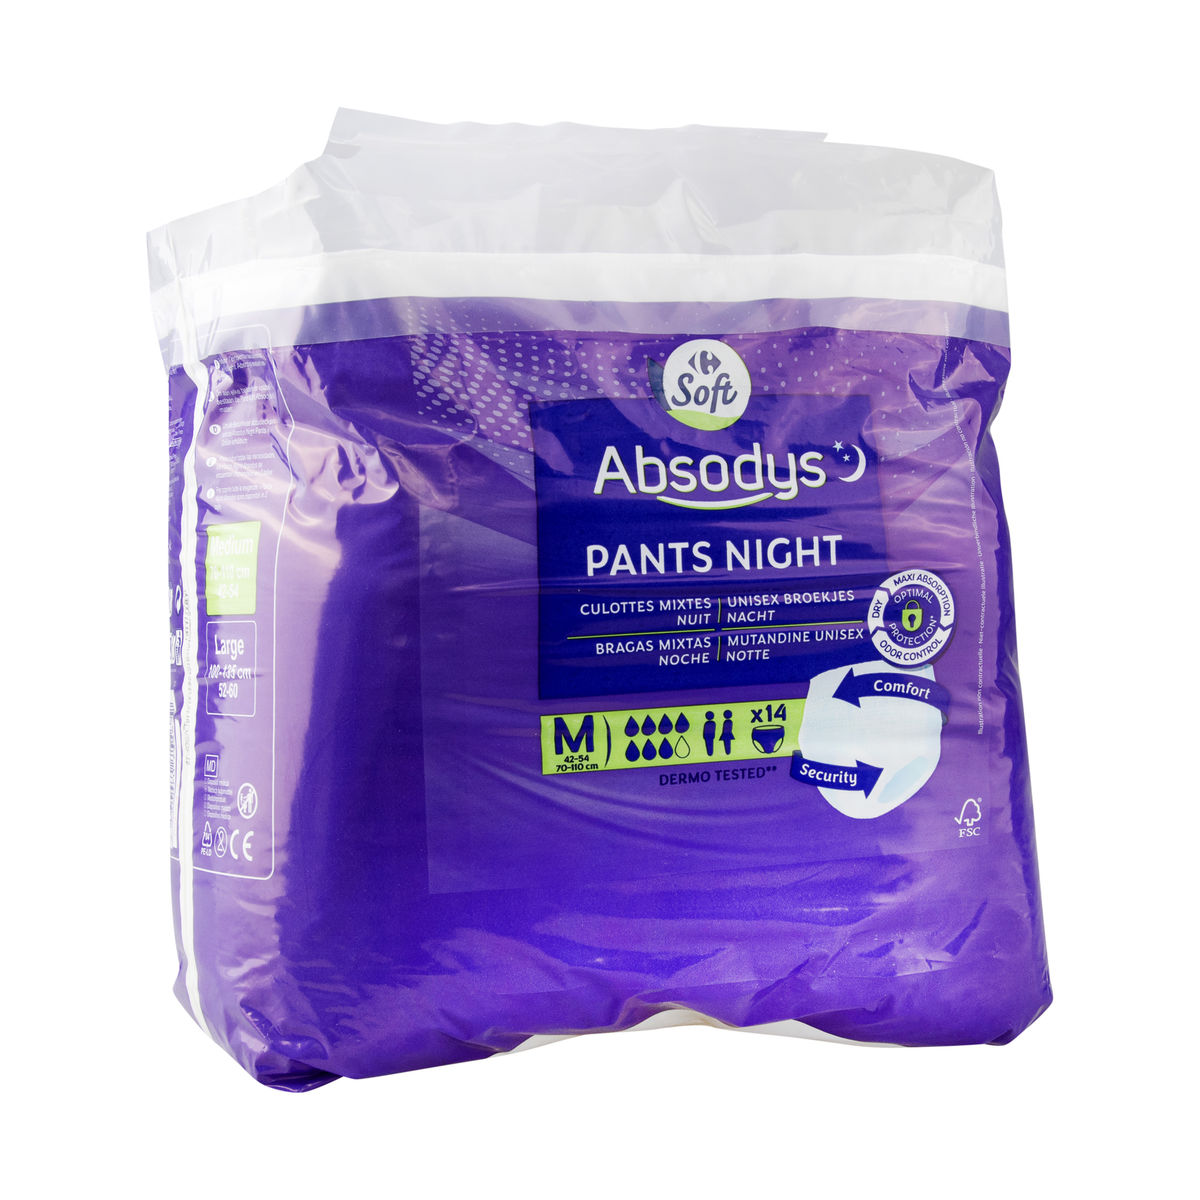 Carrefour Soft Absodys Pants Night Unisex Broekjes Nacht M 14 Stuks